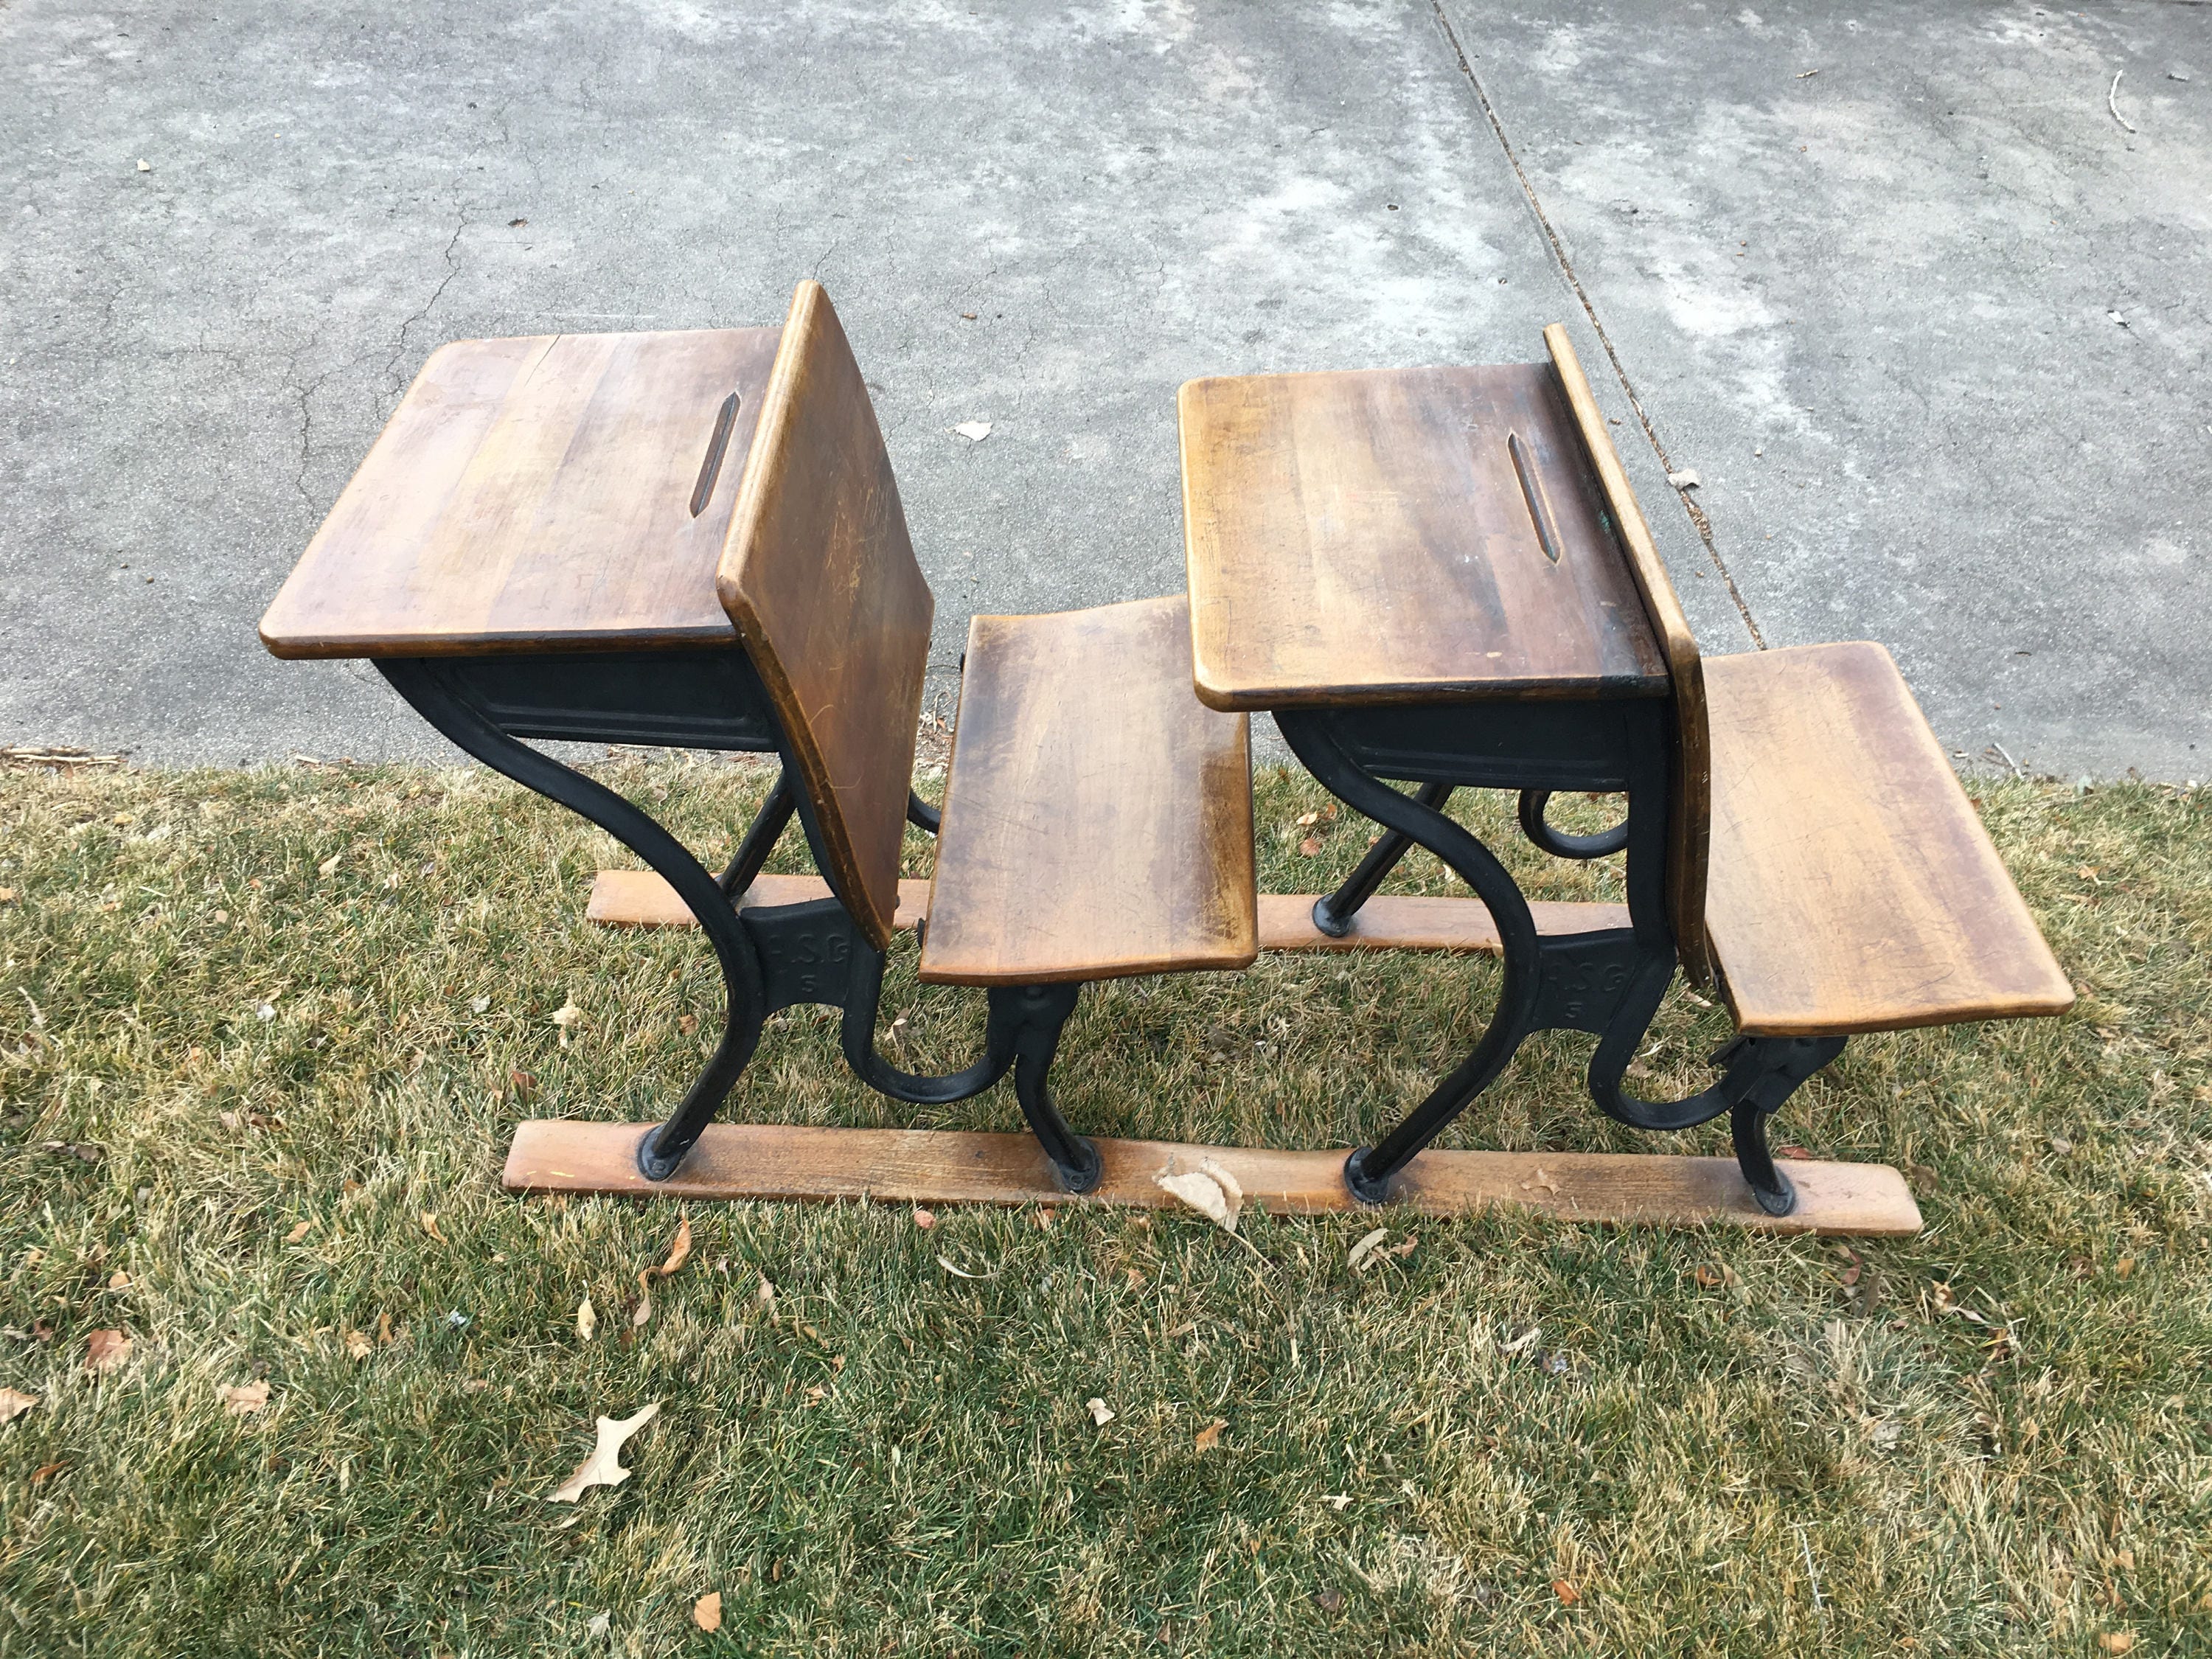 Early Century Wood School Desks Double Desks From The Early